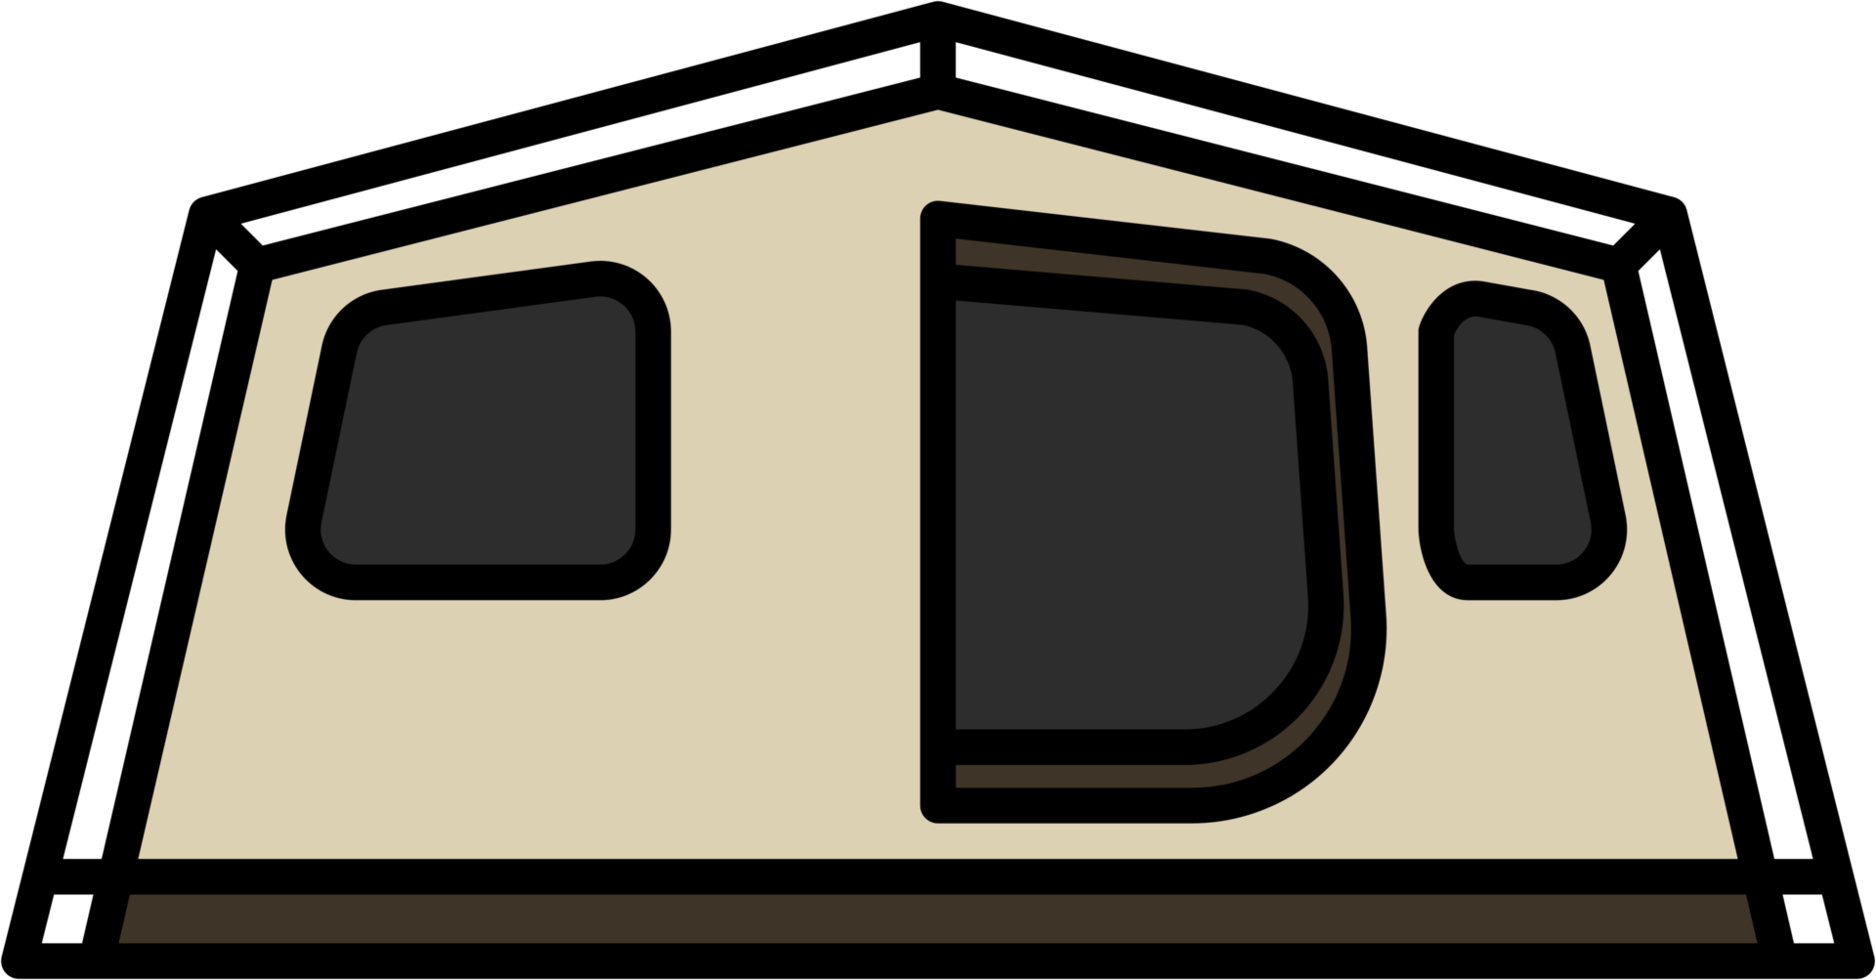 dessin de contour de tente de camping png